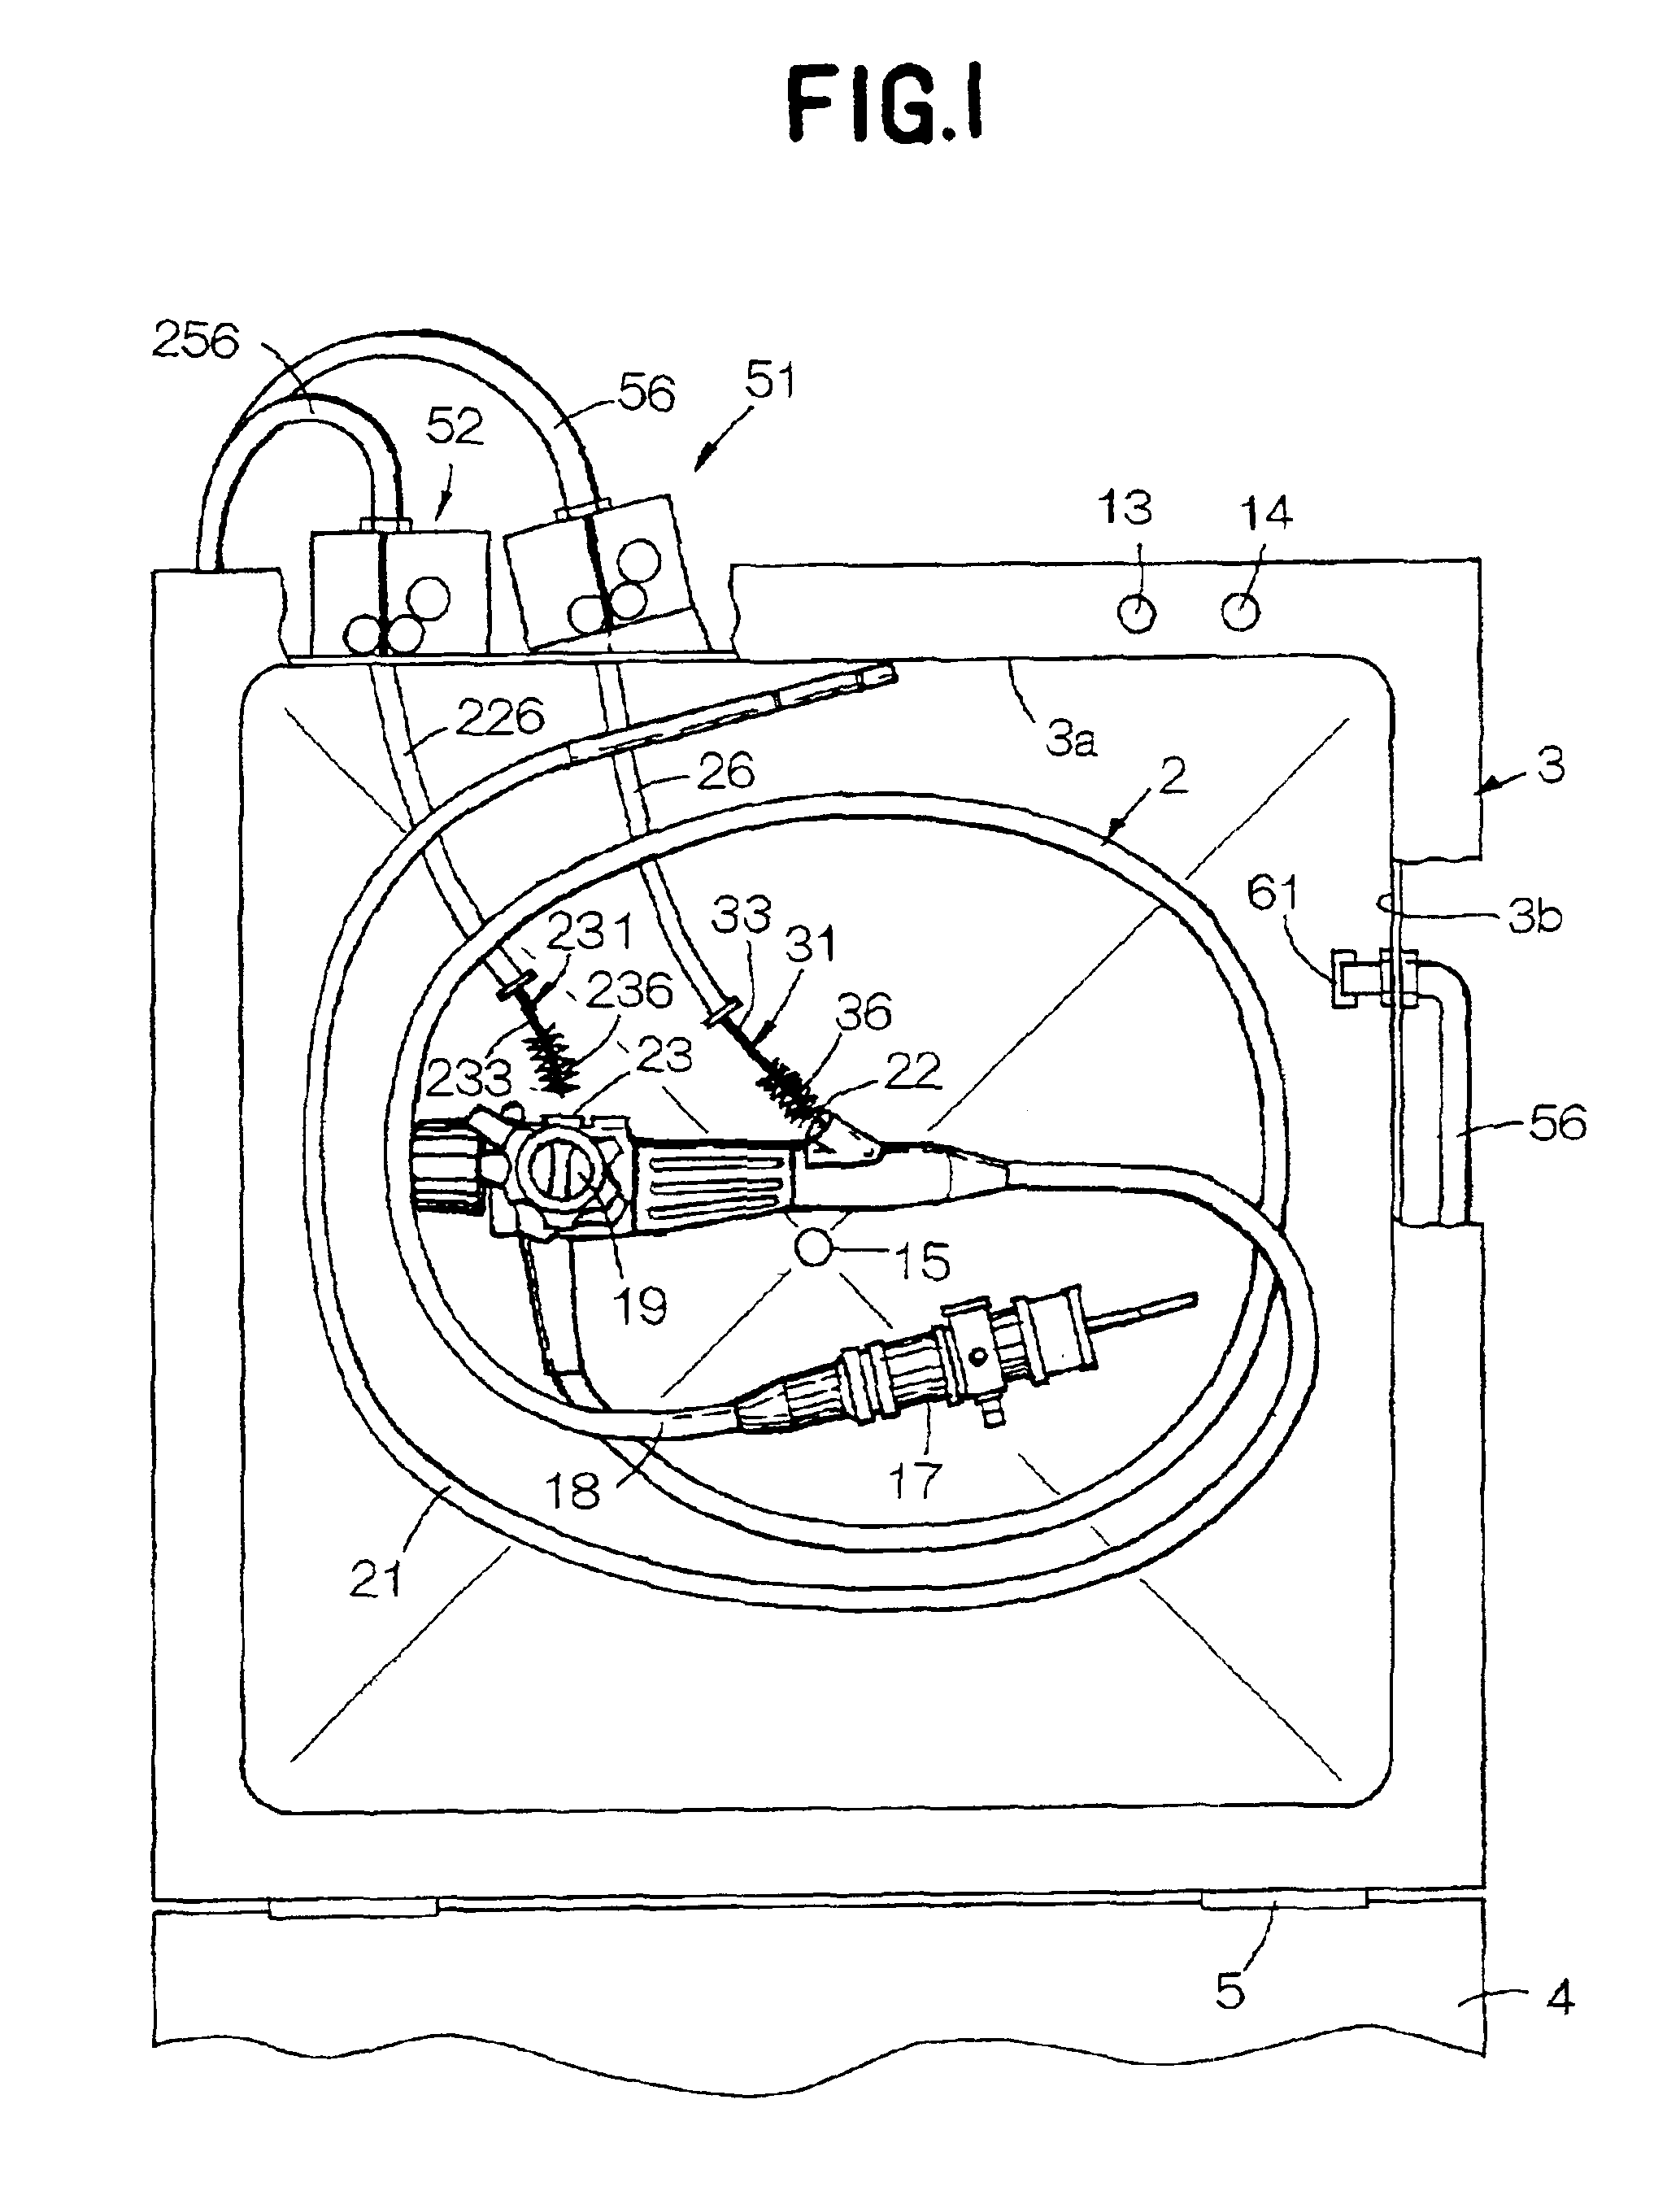 Washing apparatus for endoscope